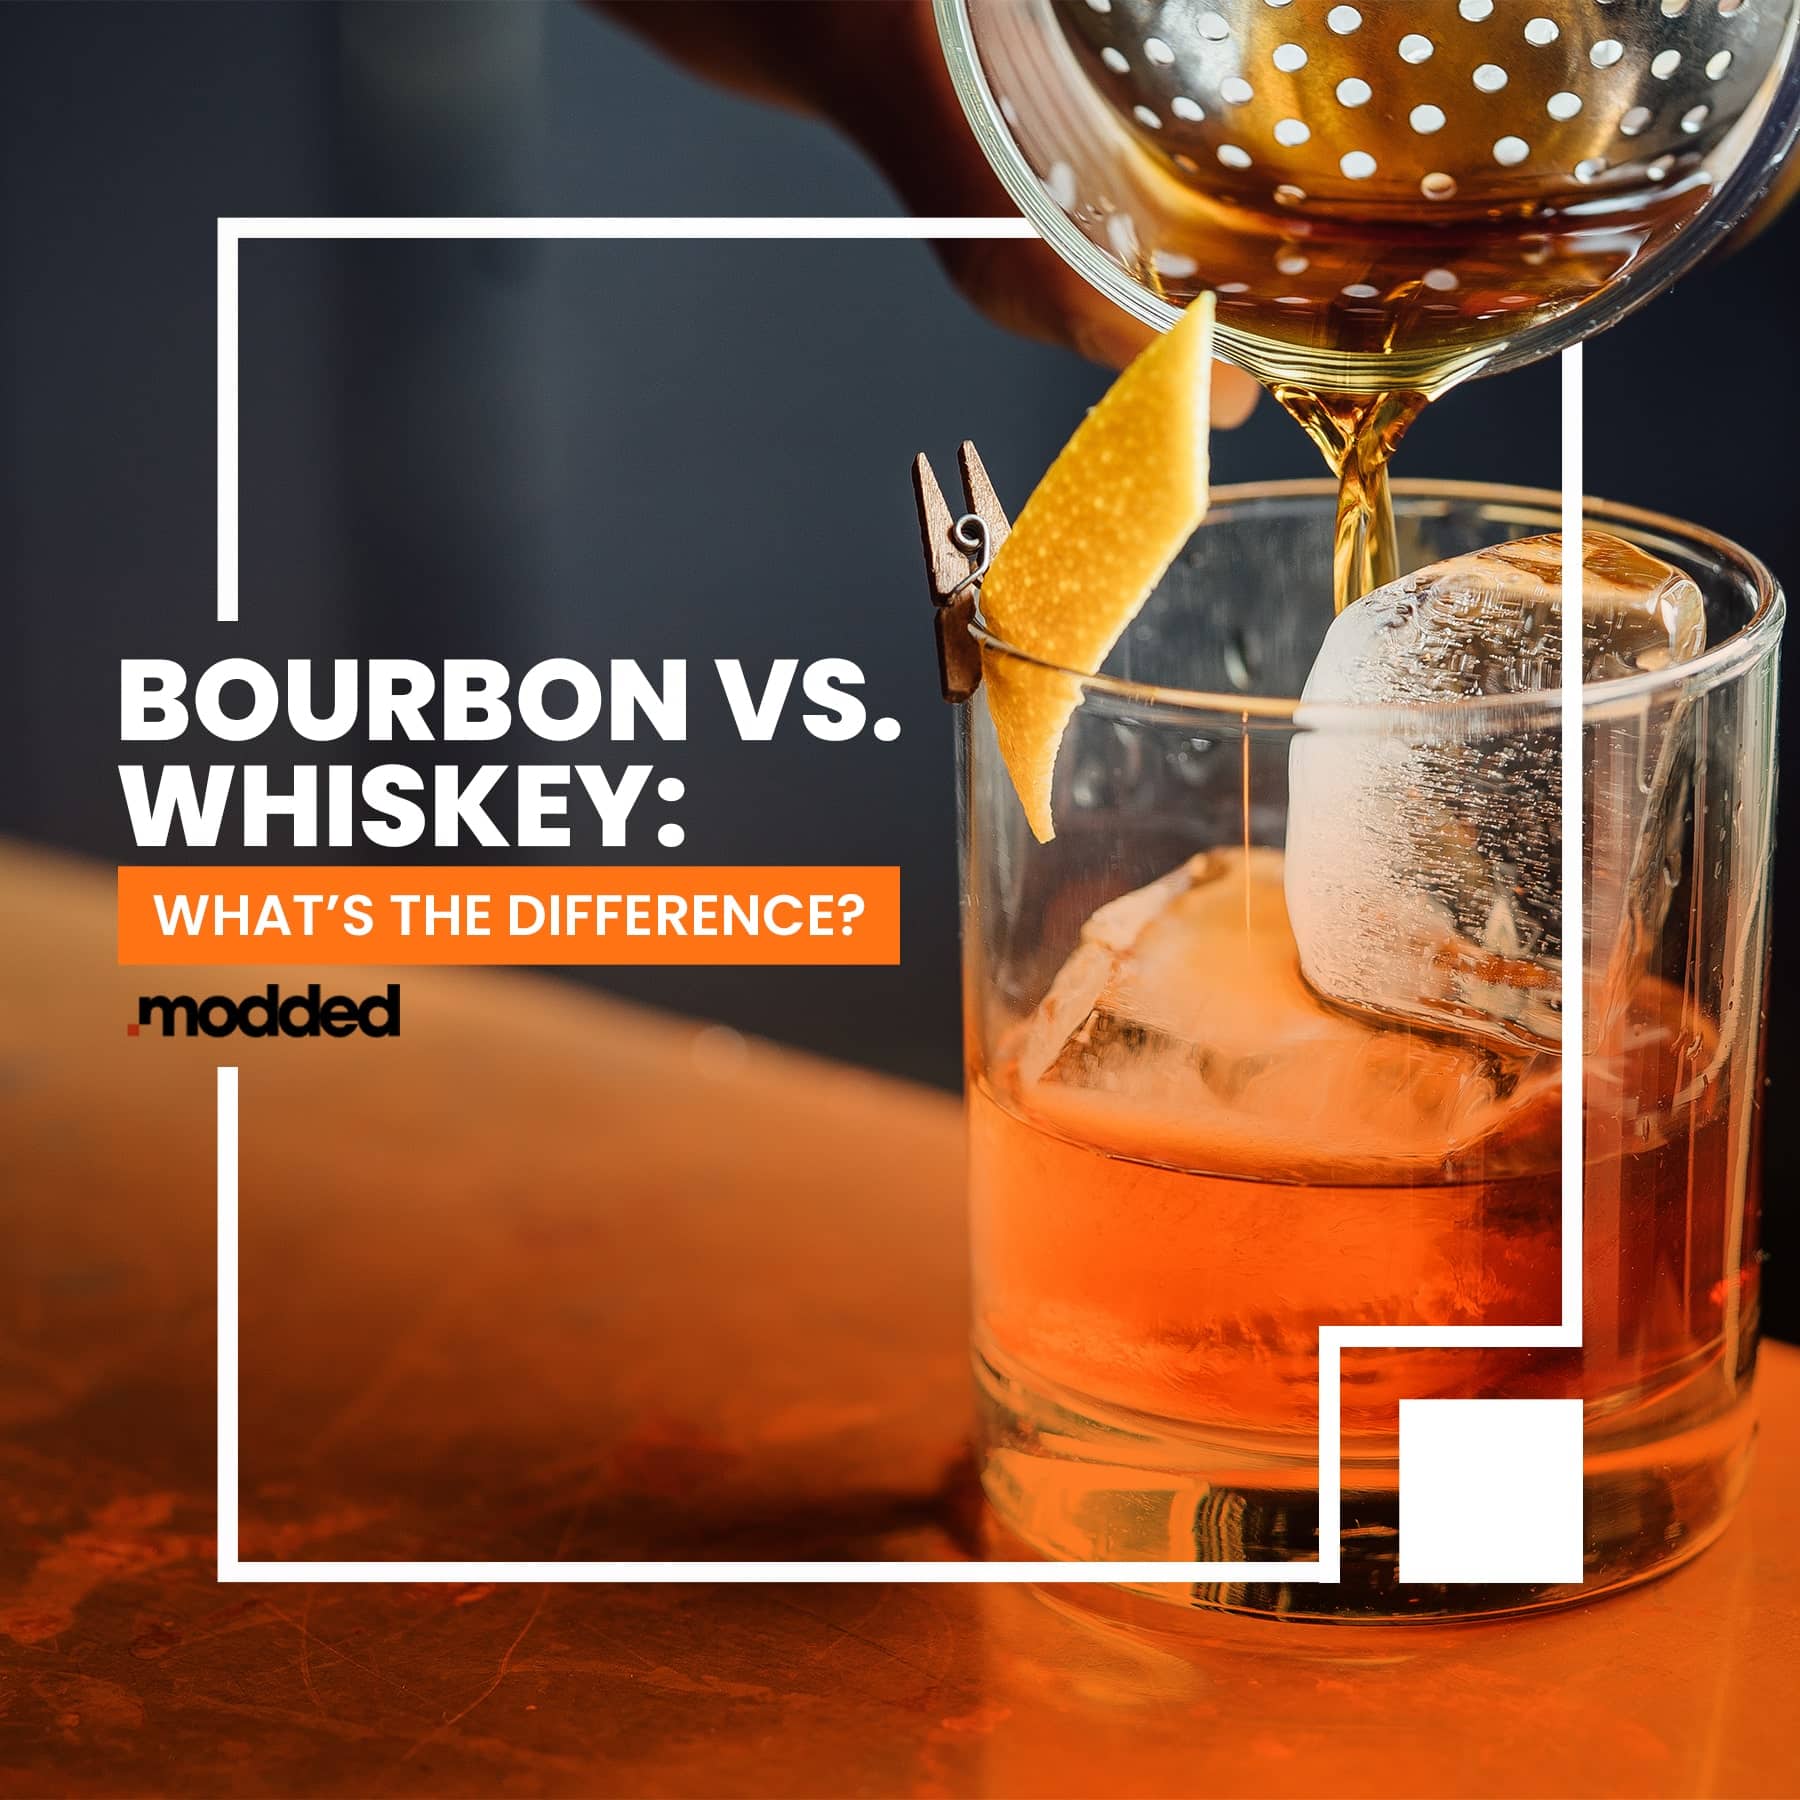 Bourbon vs. Whiskey: What